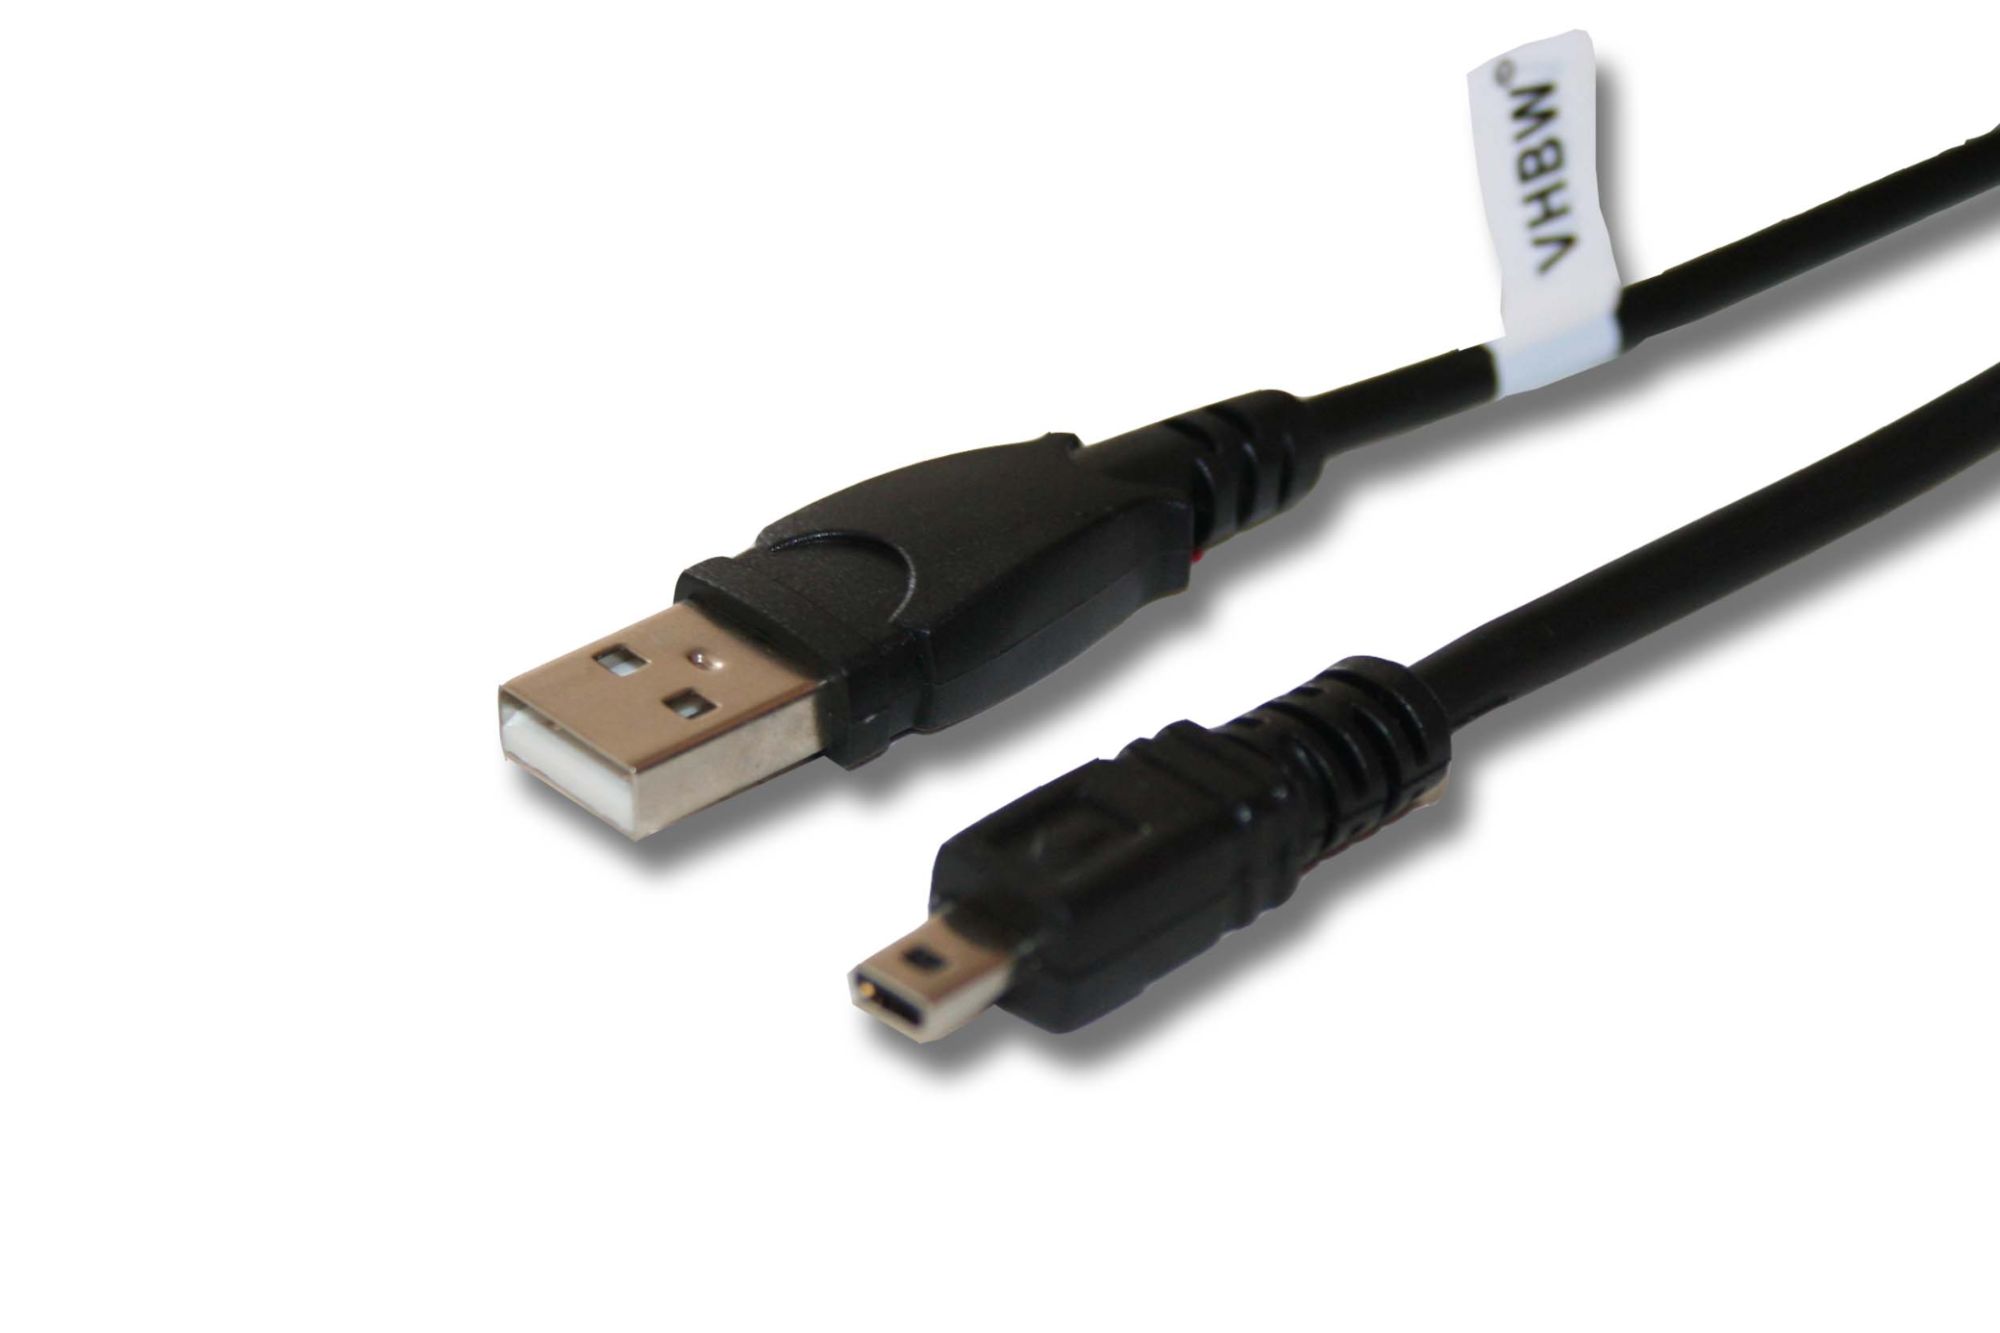 vvhbw Câble de données USB (Standard USB Type A) 150cm compatible avec Panasonic Lumix DMC-GX8K, DMC-GX8M, DMC-GM5, DMC-GF7 appareil photo